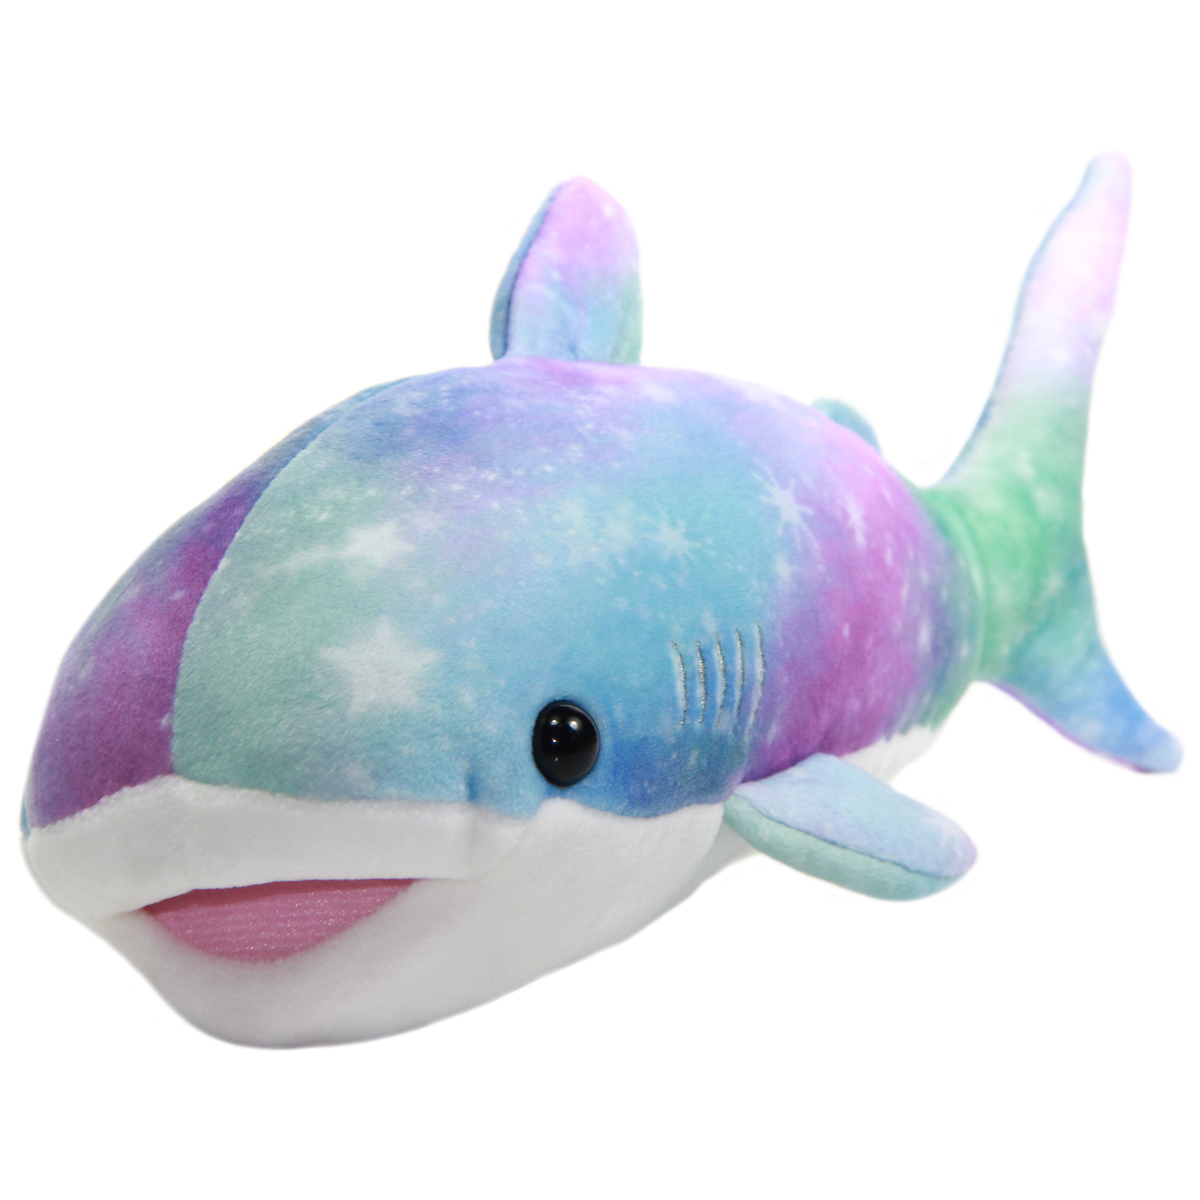 Aquarium Collection Whale Shark Plush Doll Toy Super Soft Stuffed Animal Galaxy 8 Inches